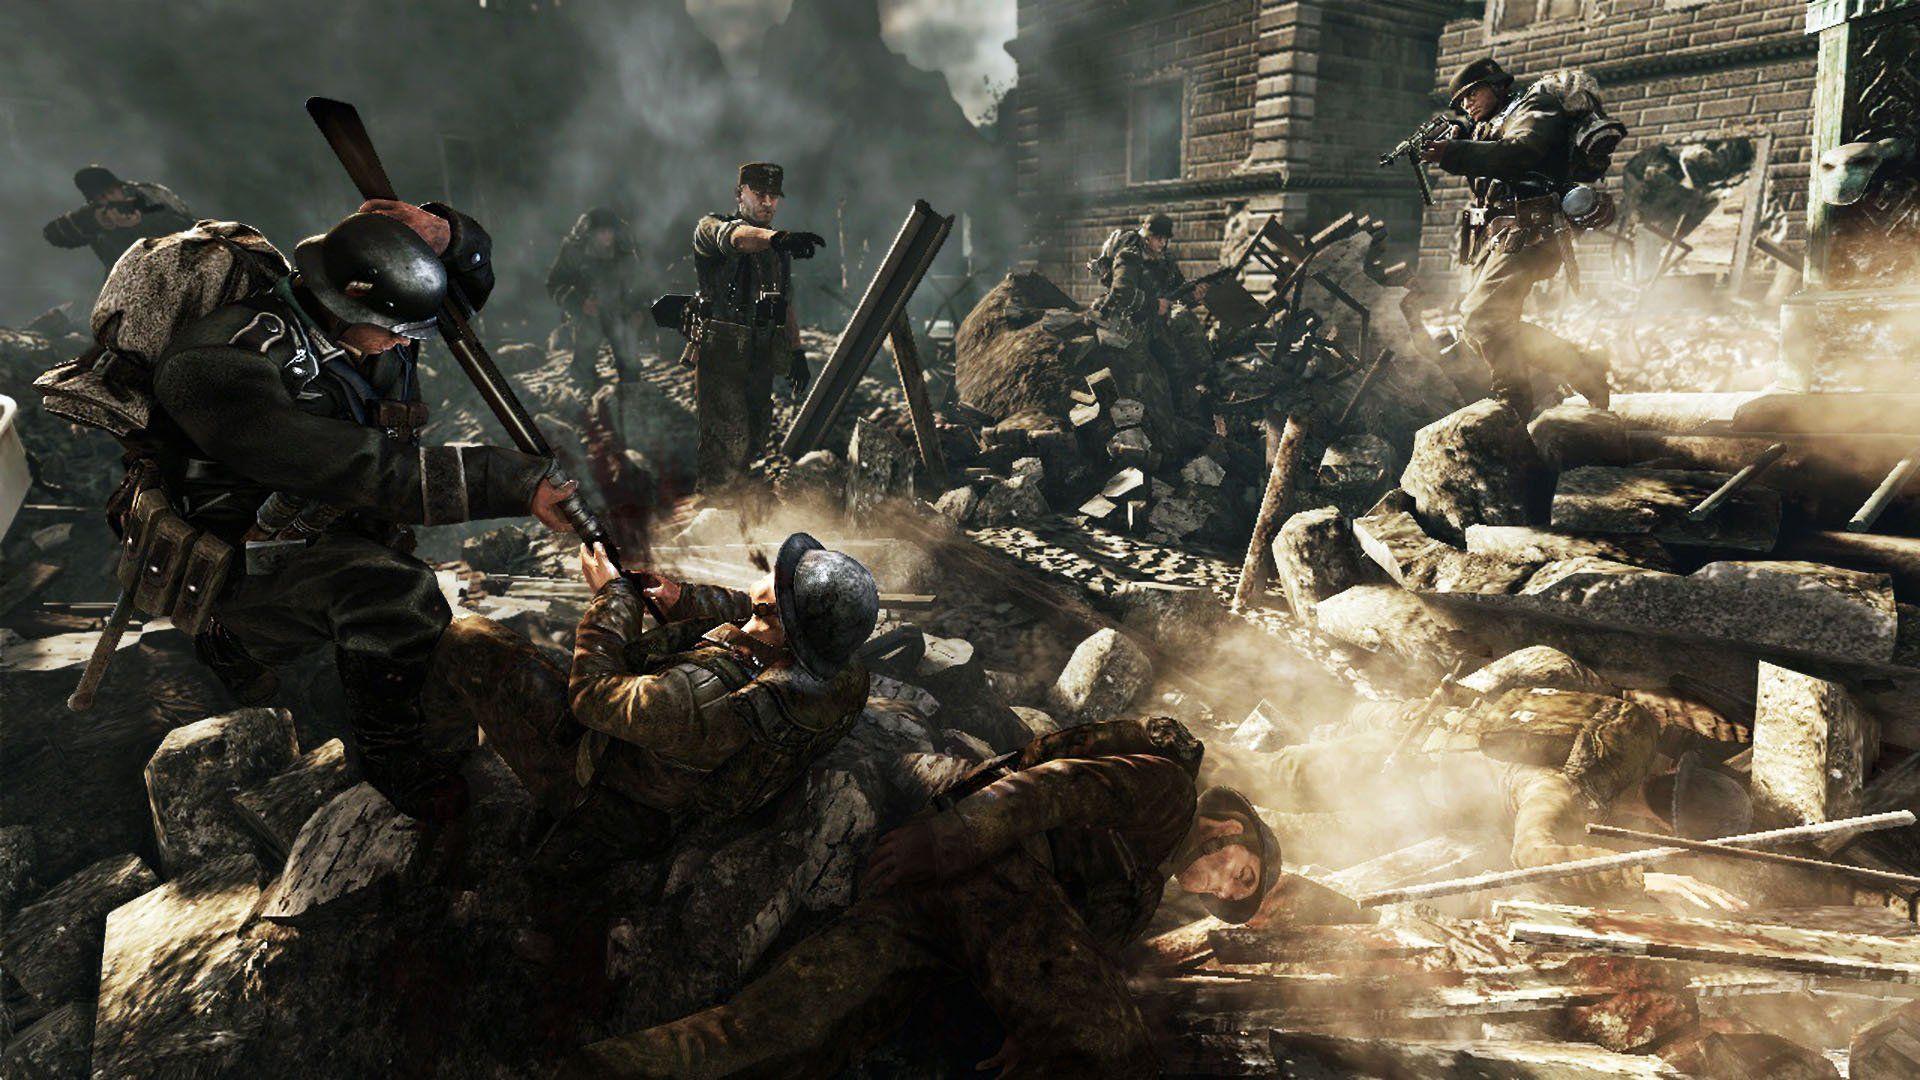 Warrior Battle 4K wallpaper download